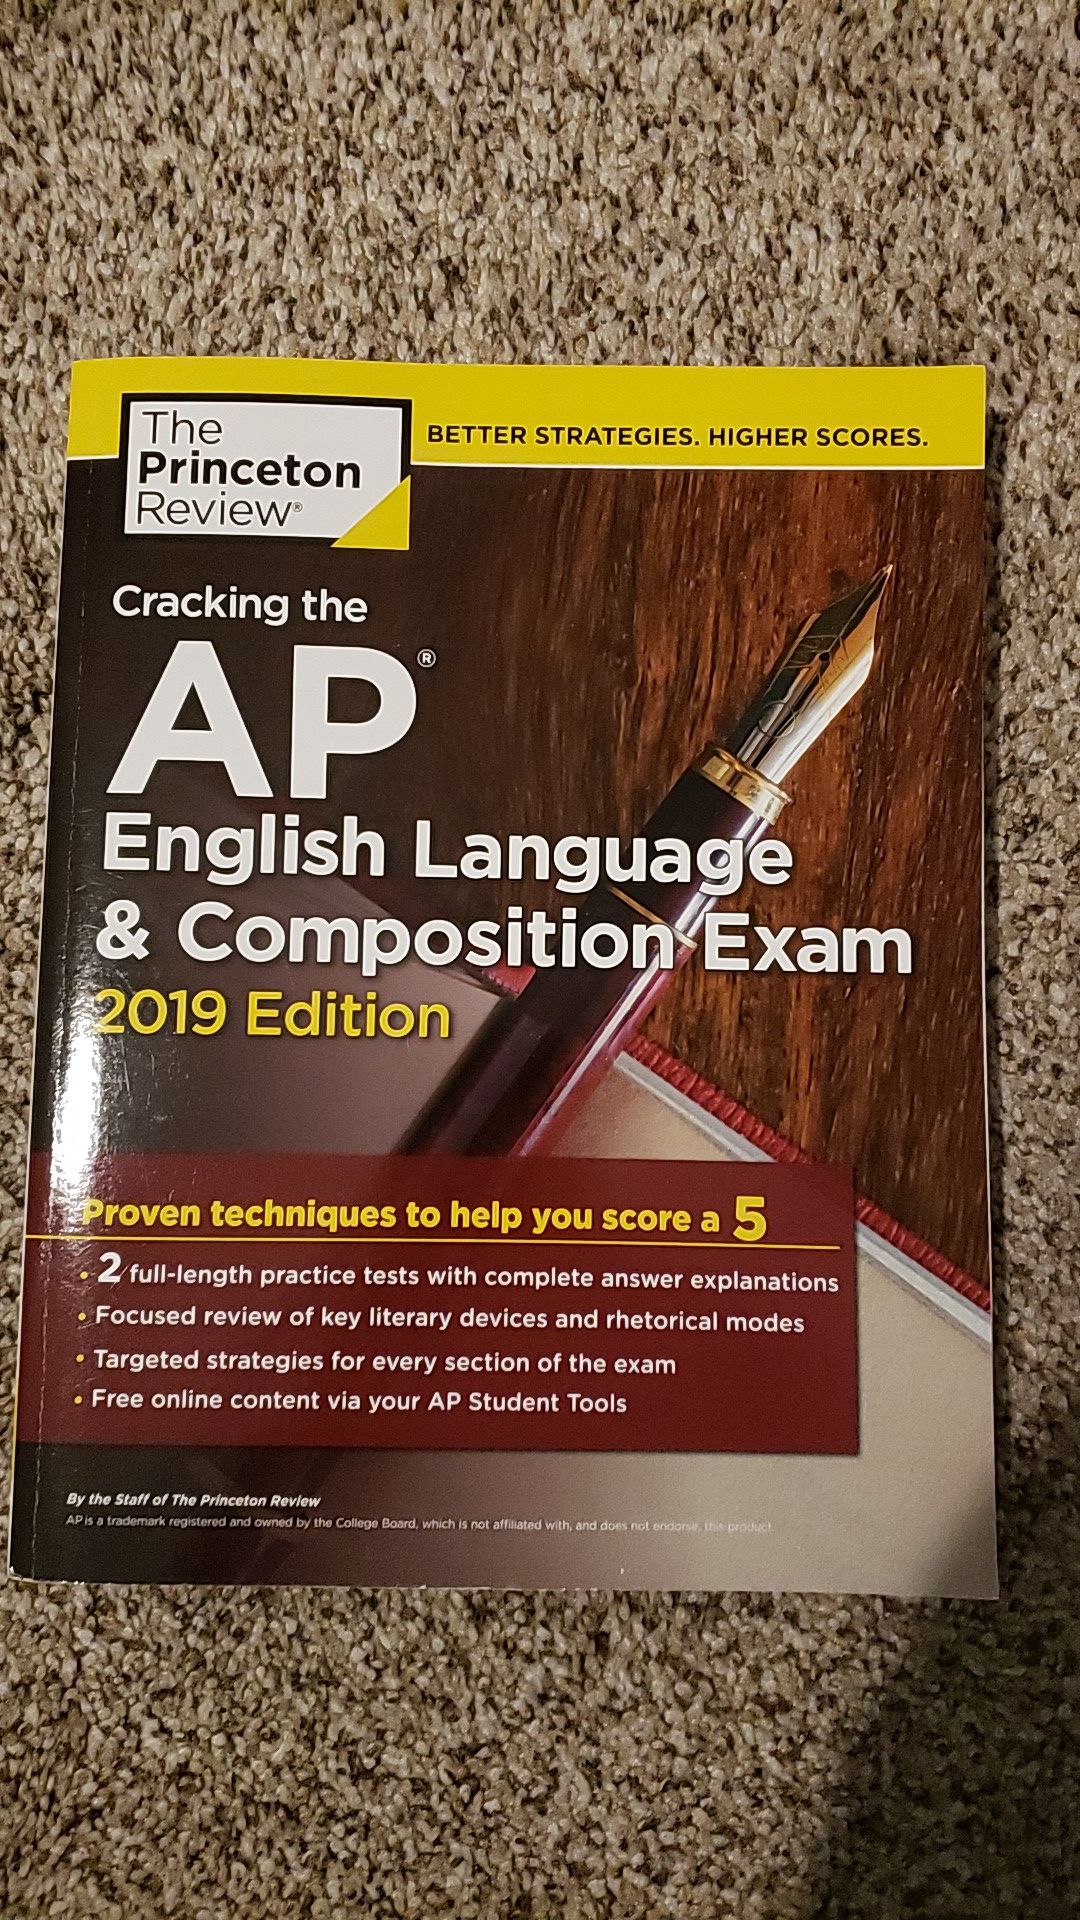 AP English Language & Composition Exam 2019 edition exam prep book